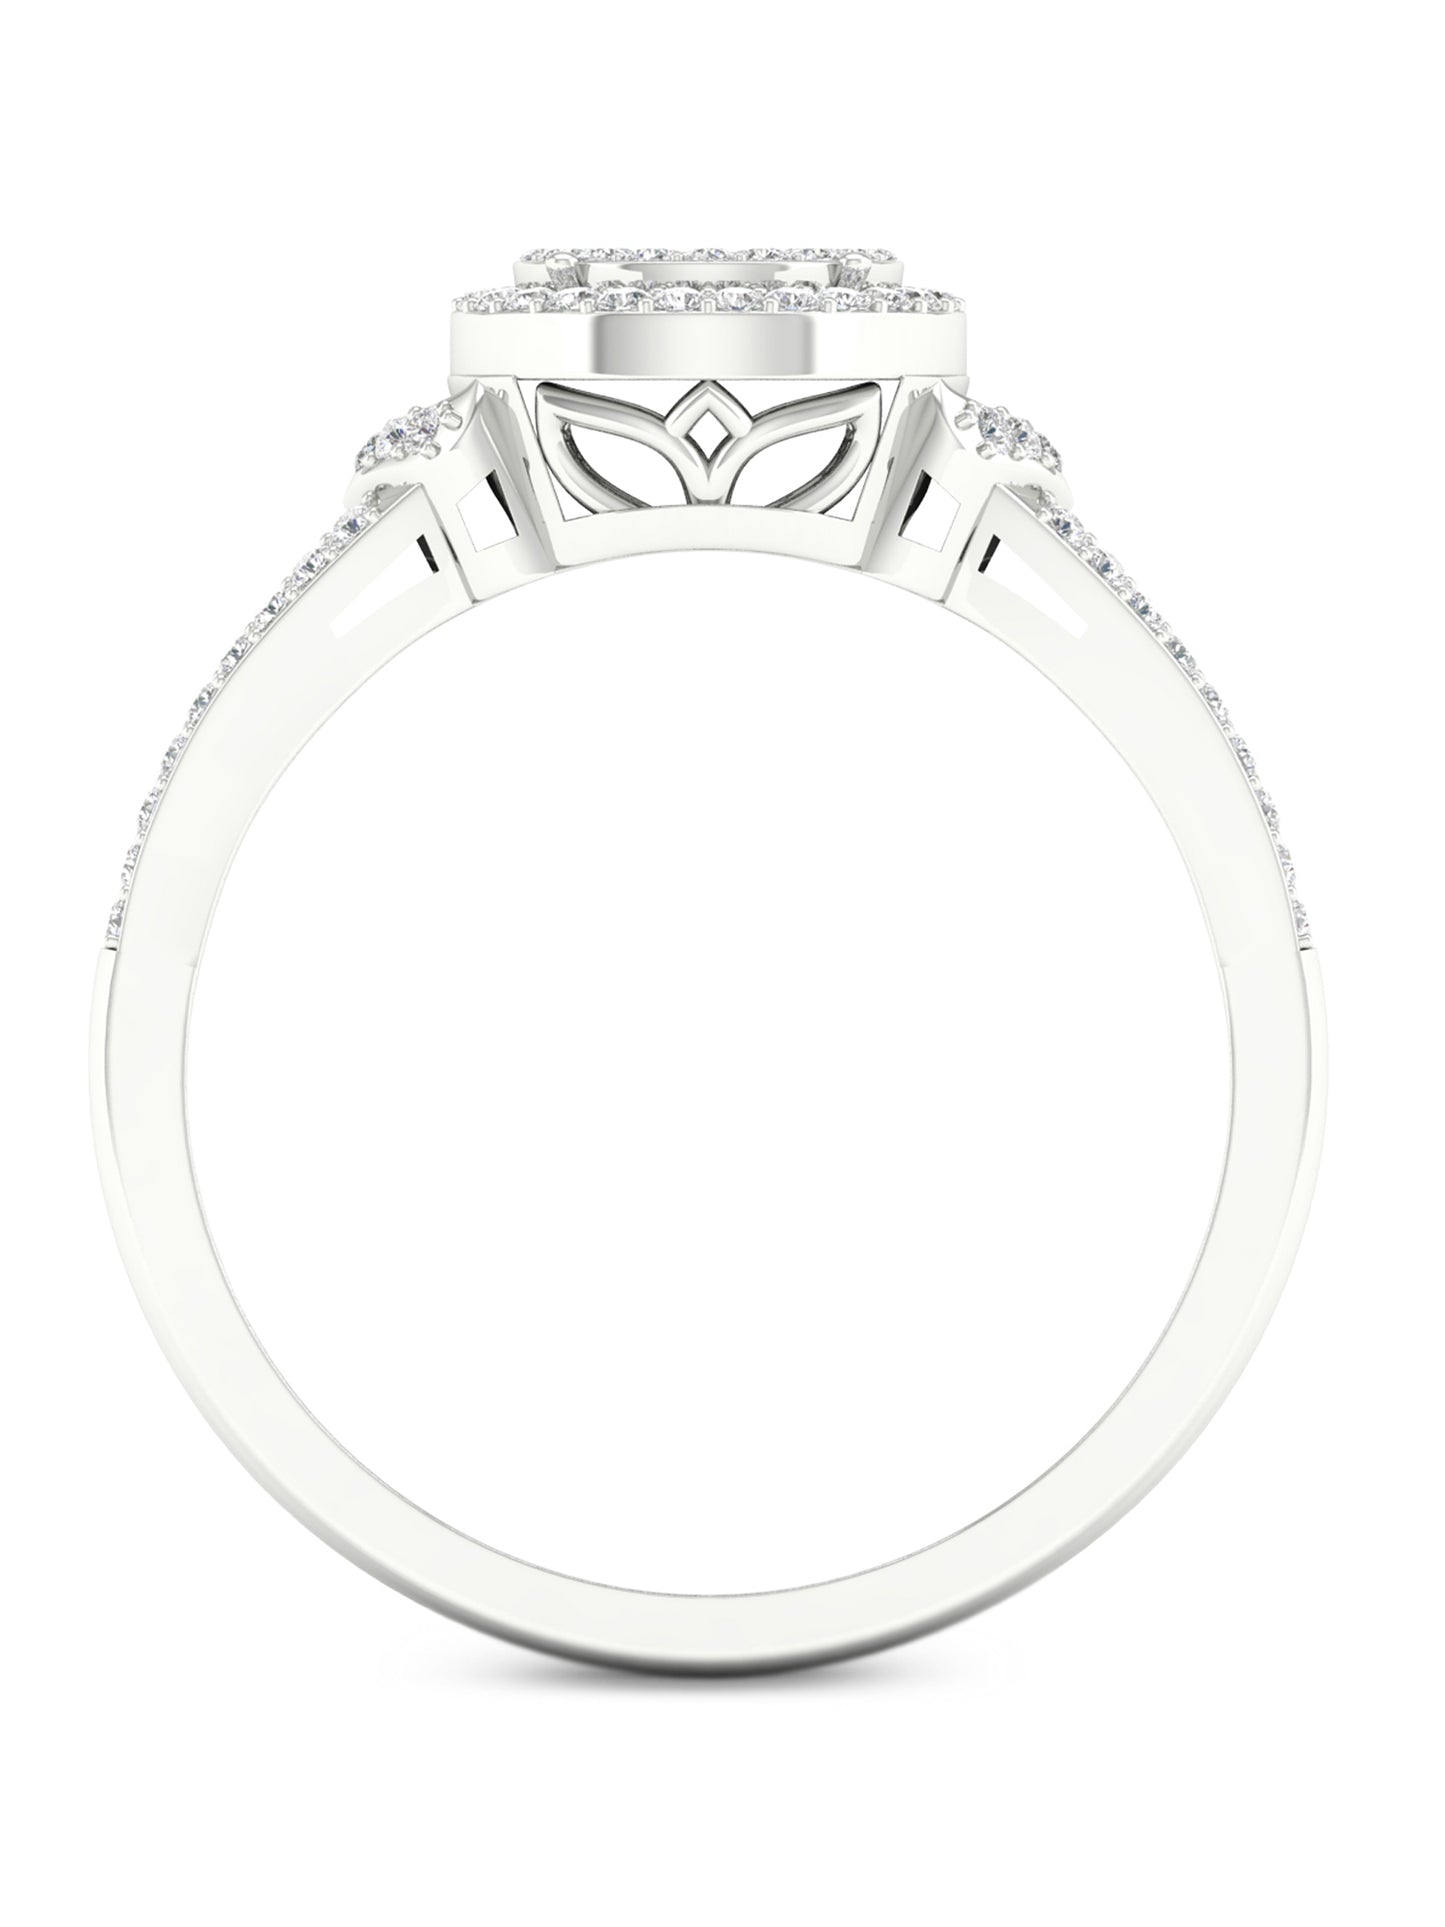 Imperial 1/4Ct TDW Diamond 10K White Gold Halo Engagement Ring